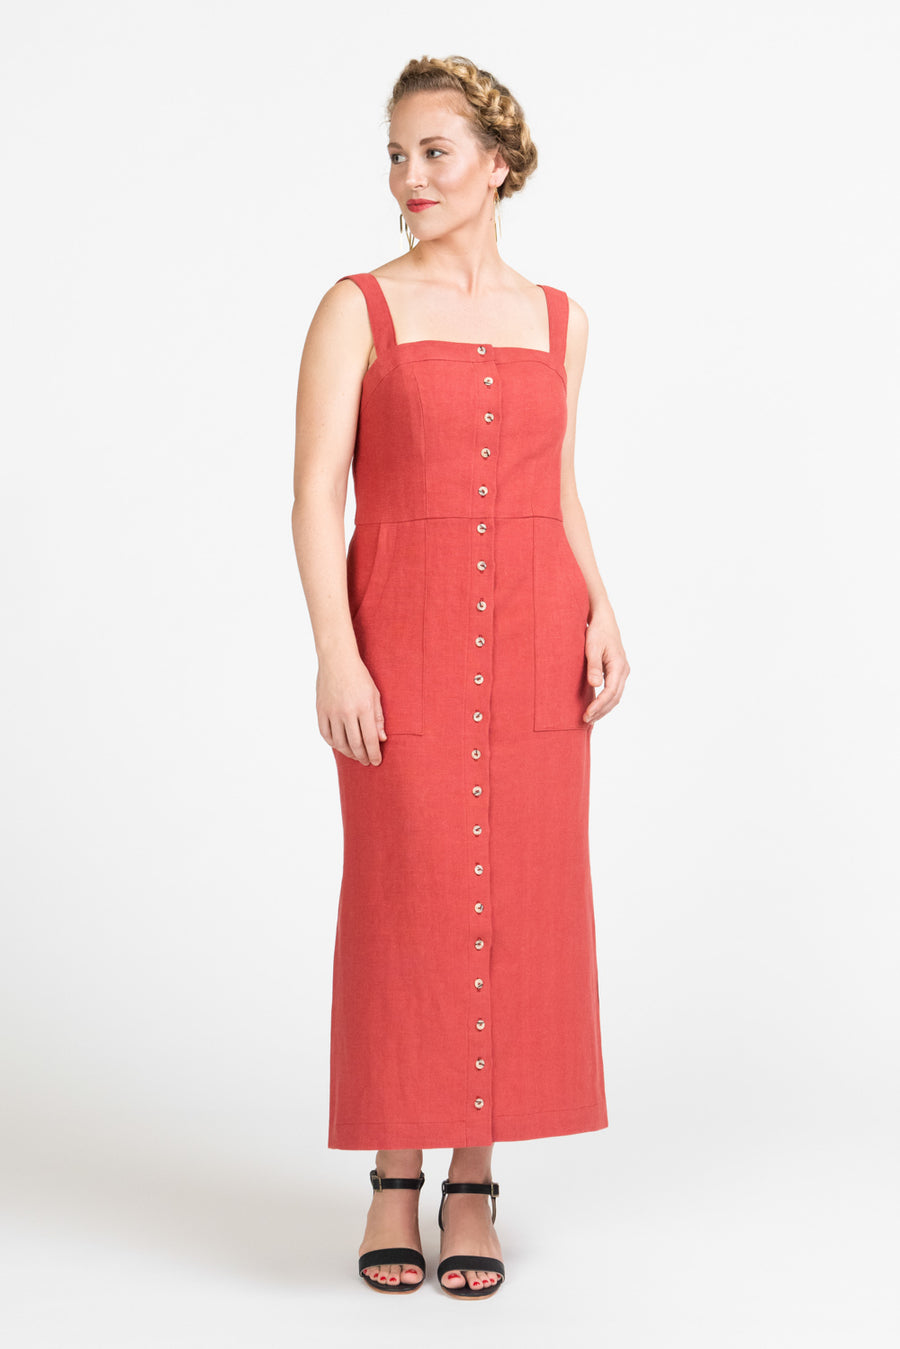 Fiona Sundress Pattern // Button-up midi length summer dress pattern // Closet Core Patterns